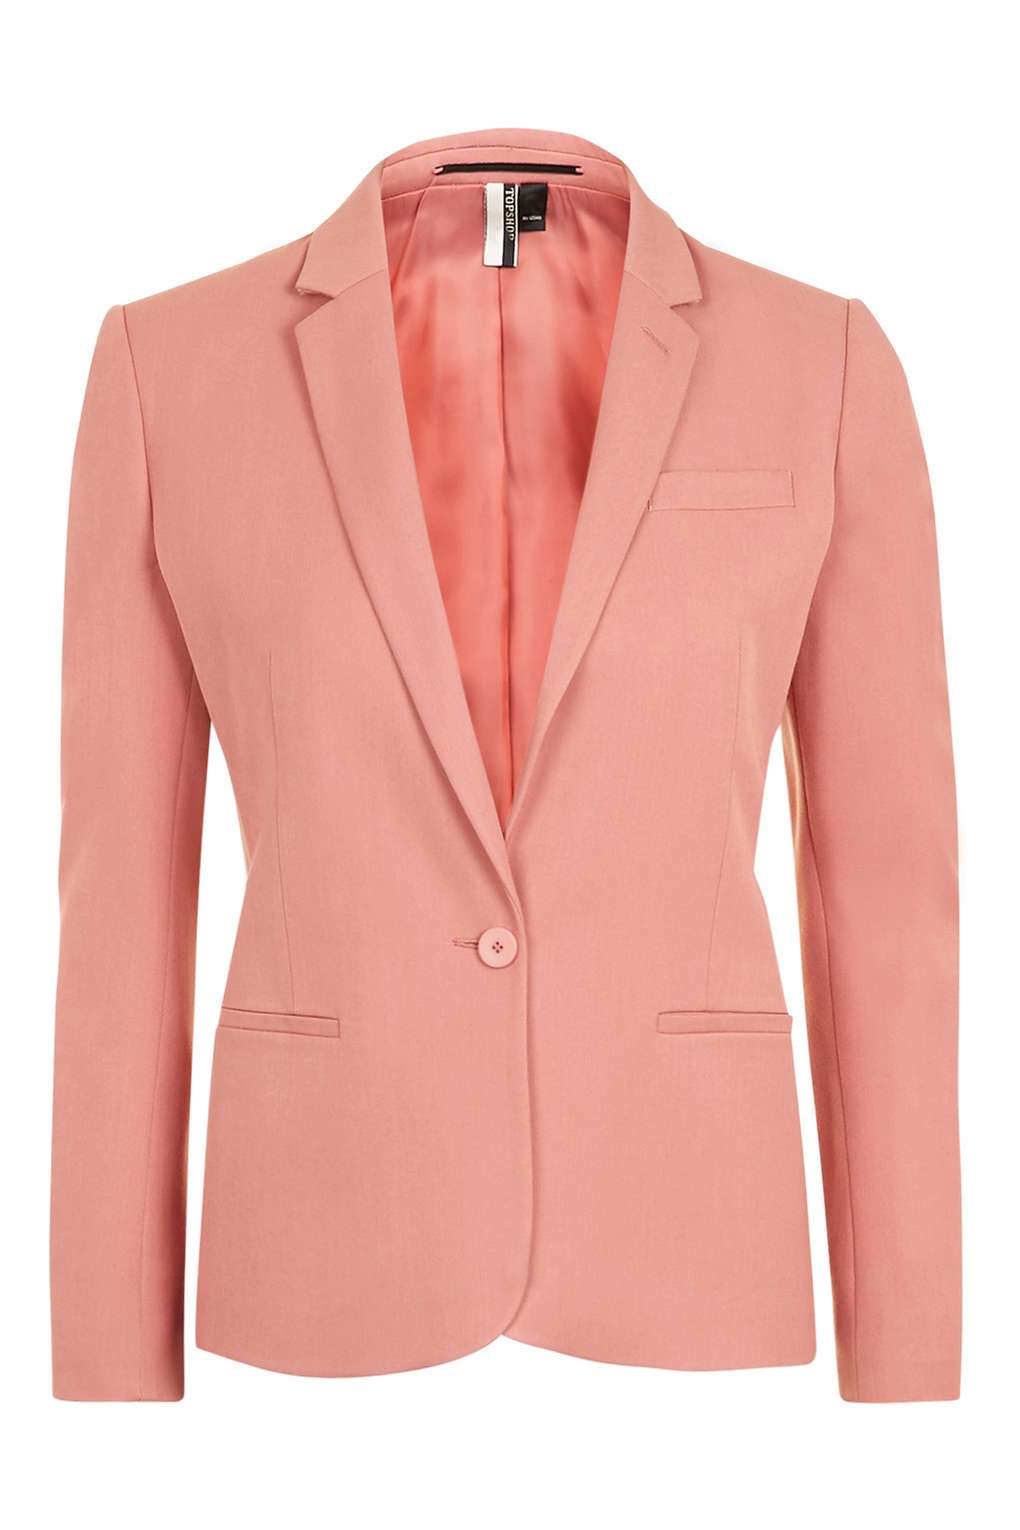 TOPSHOP Suit Jacket in Pink - Lyst